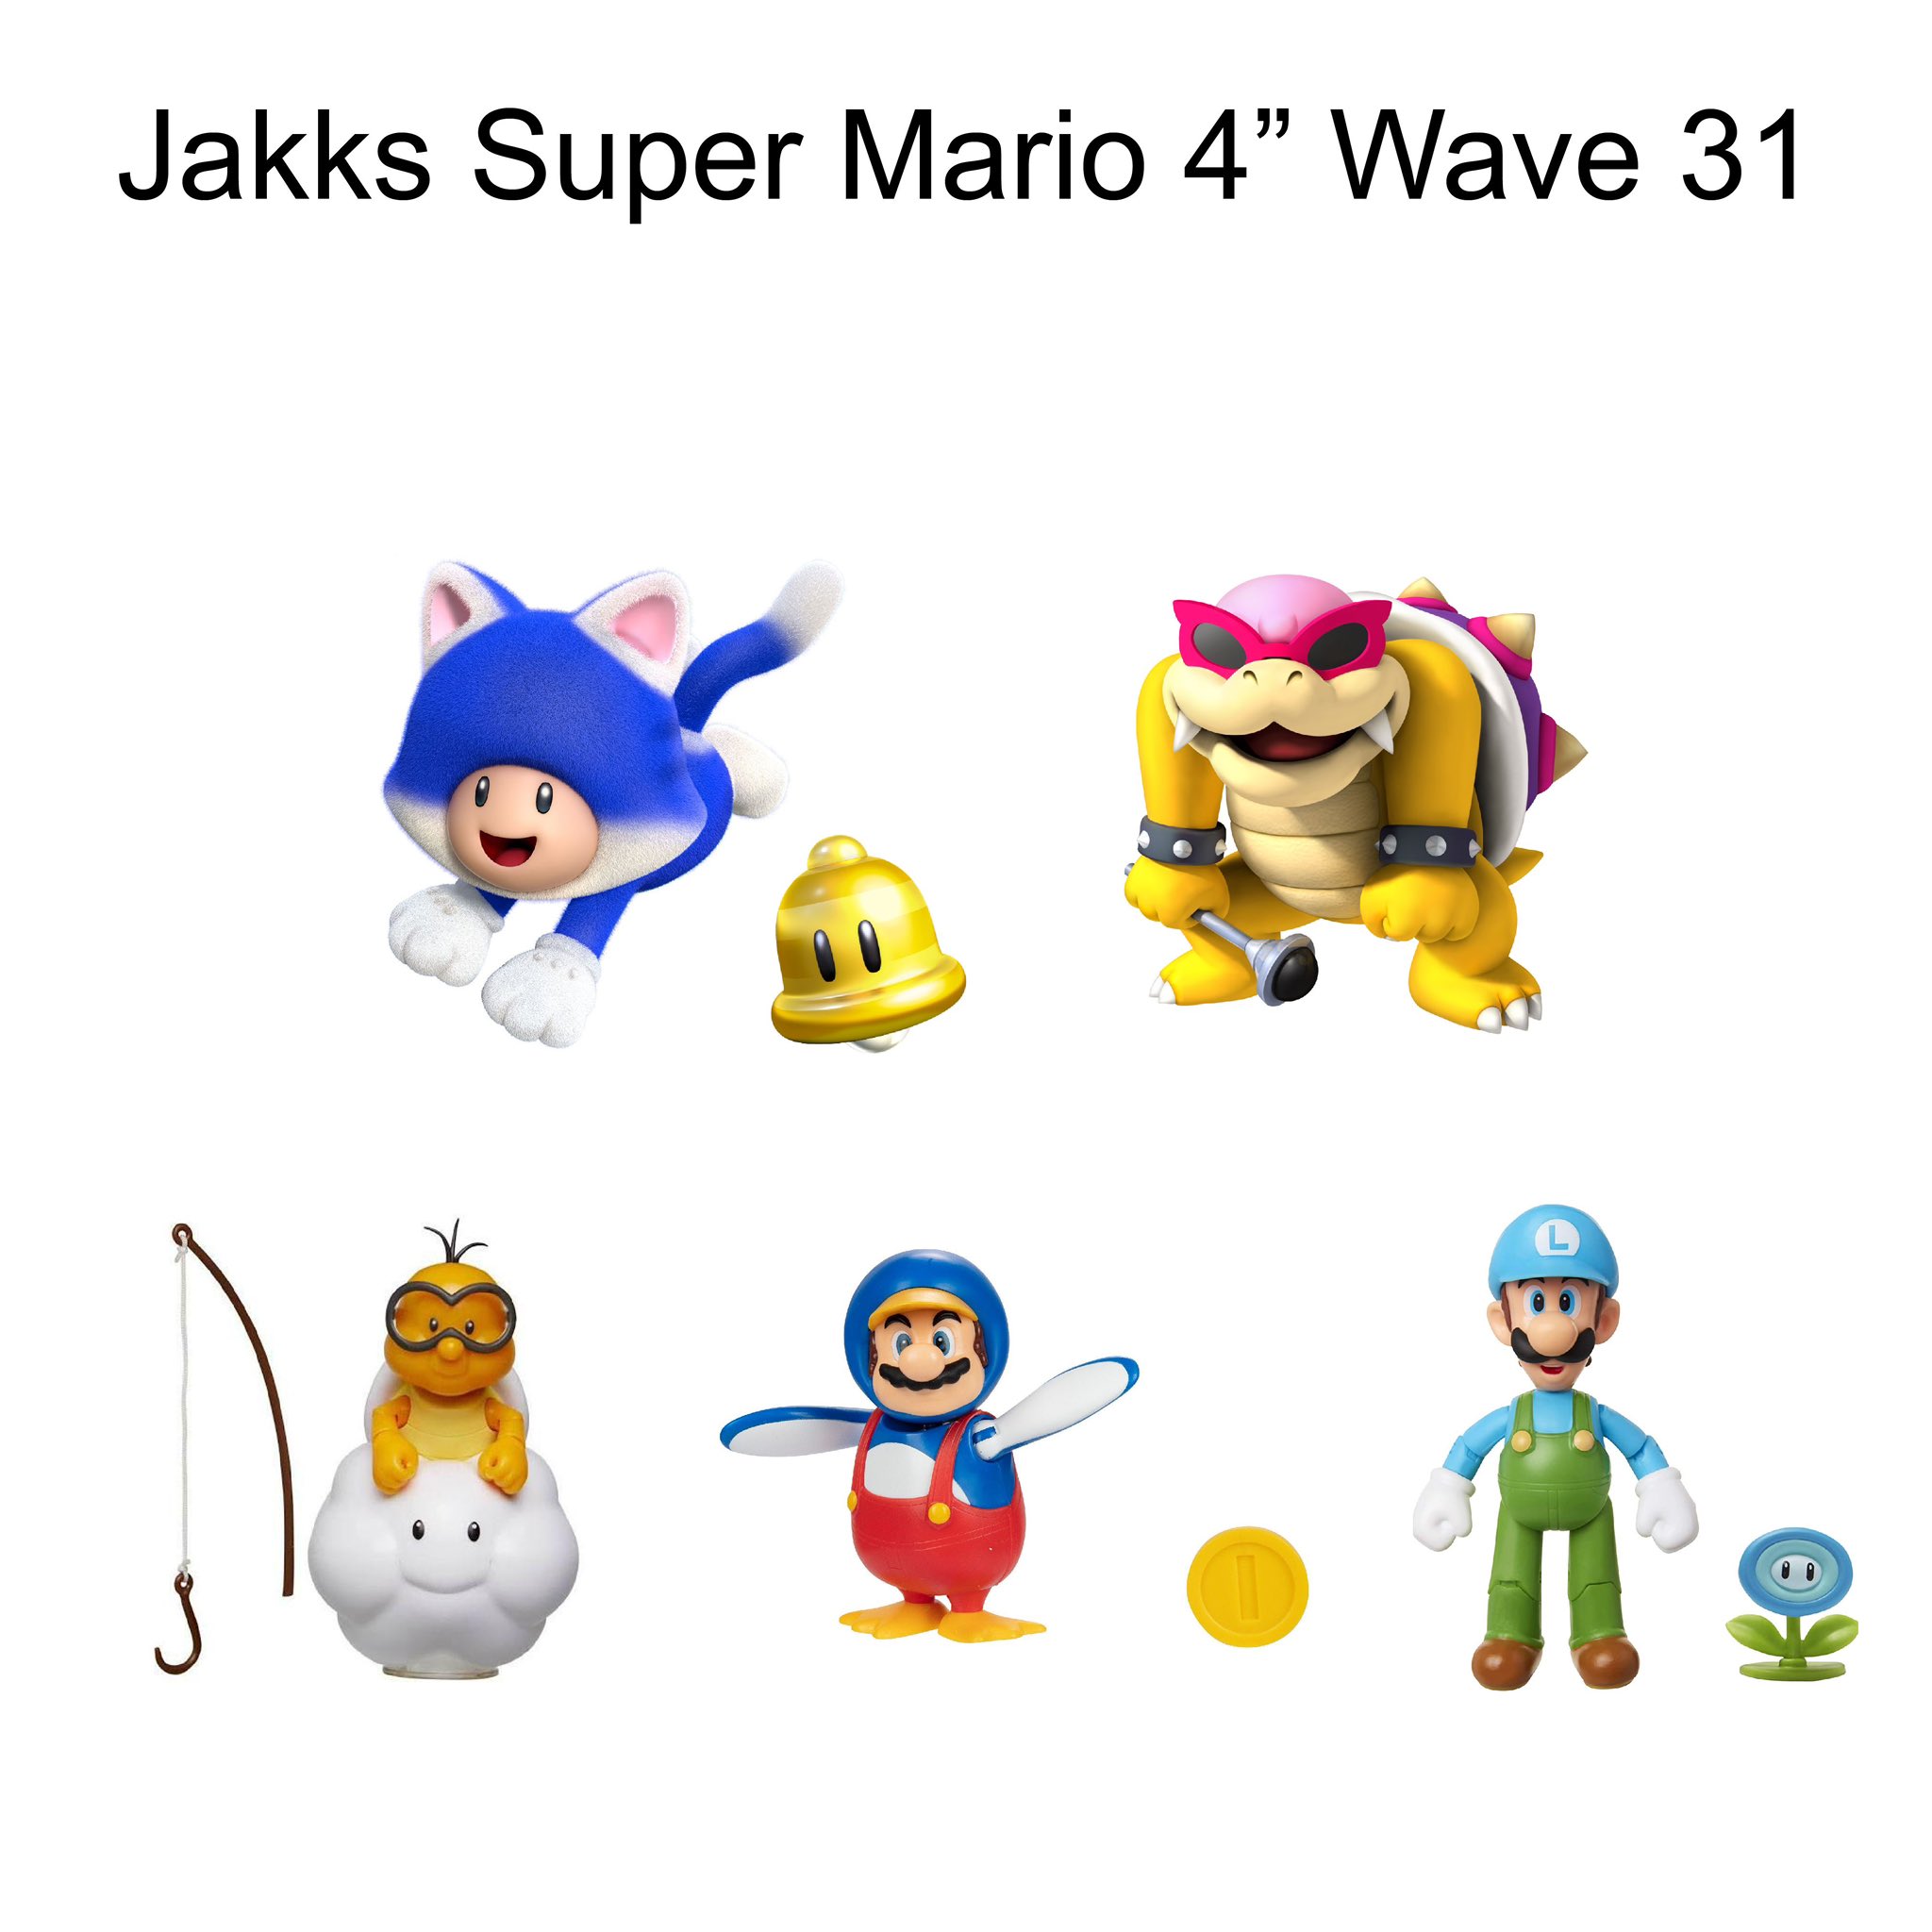 Nintendo Merch Central on X: Jakks Super Mario 4” Wave 31 has